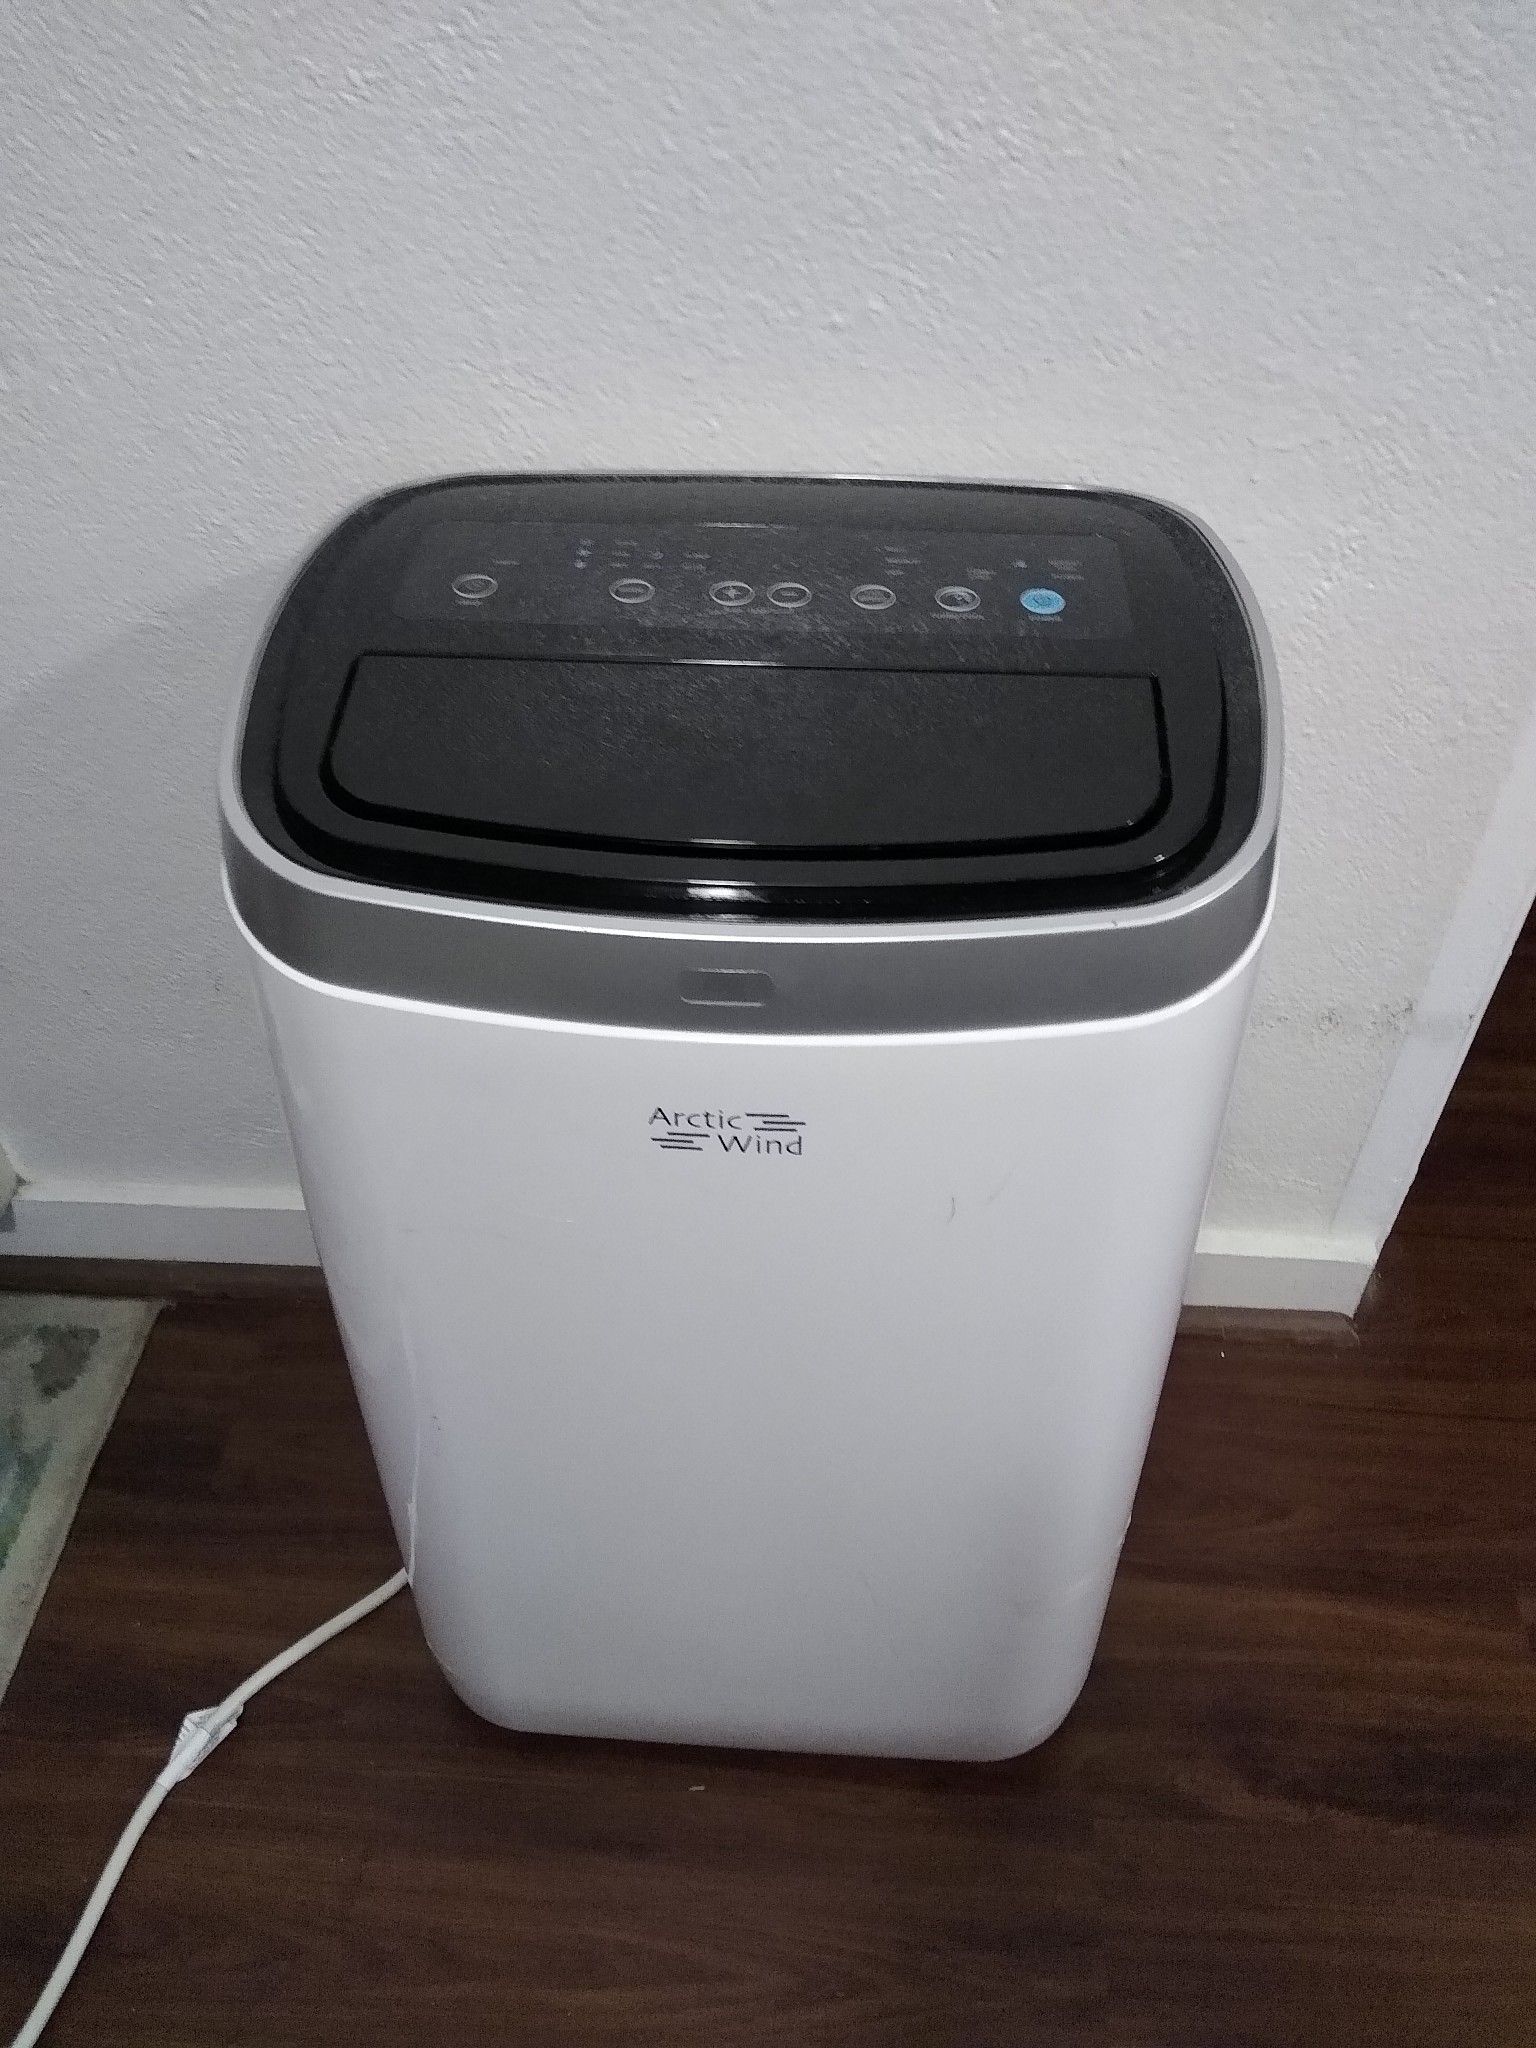 ARCTIC WIND portable air conditioner